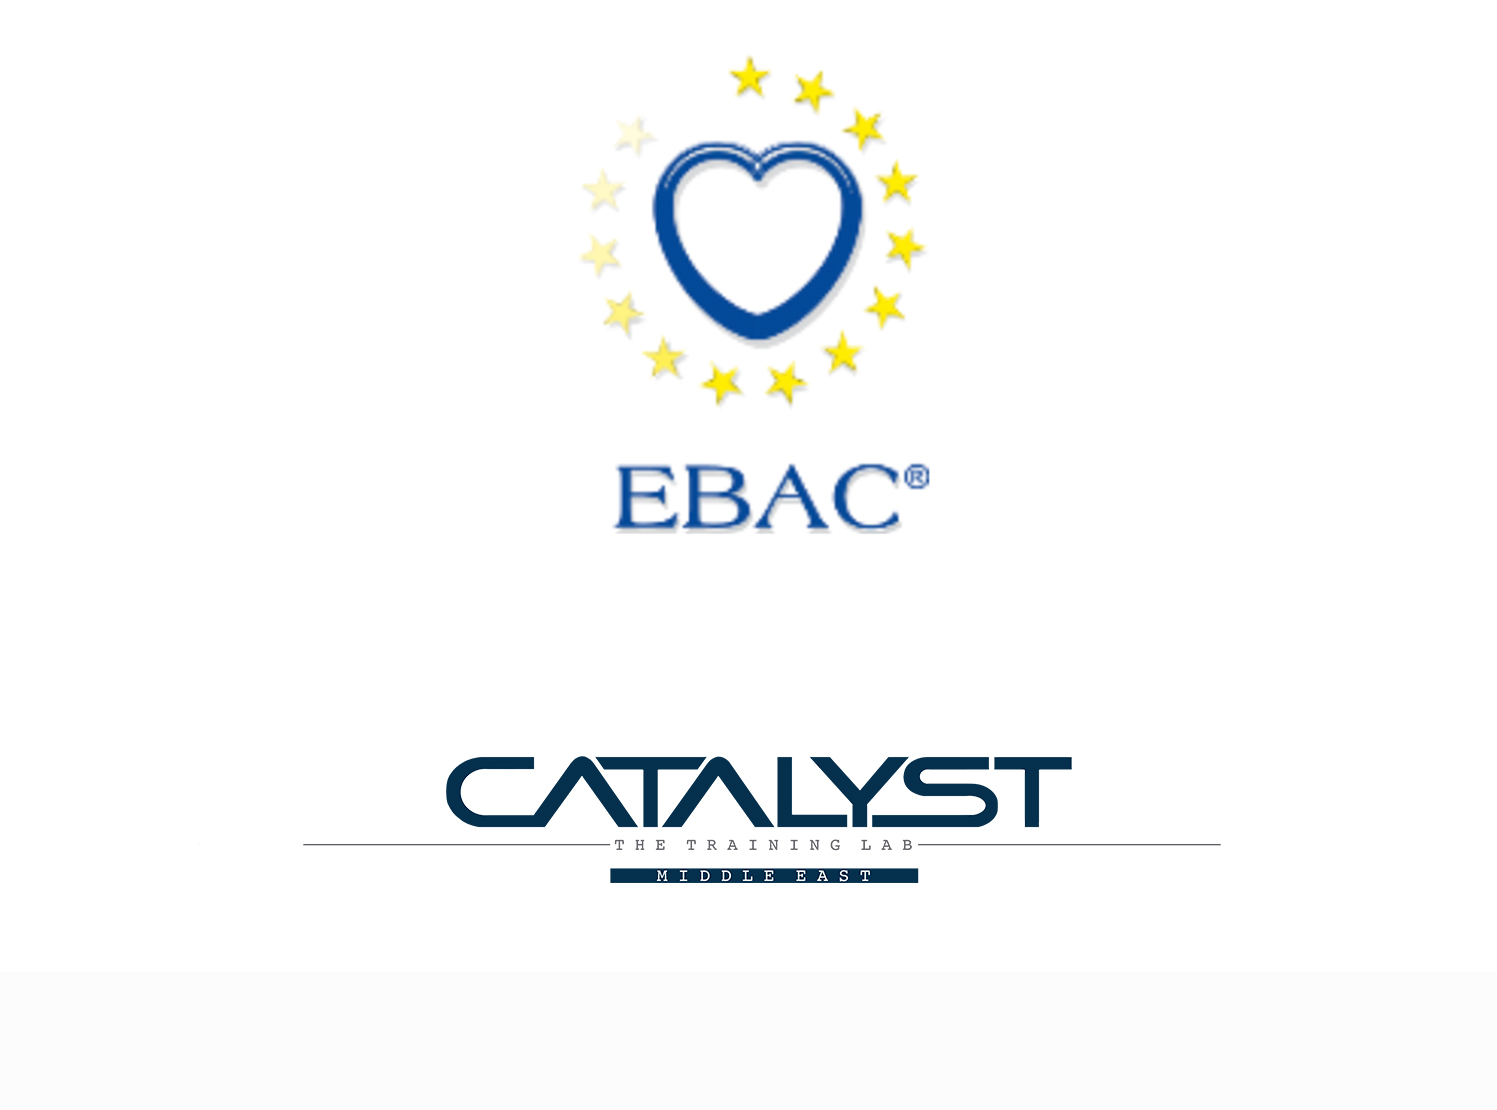 CATALYST Training Lab is awarded EBAC Accreditation 